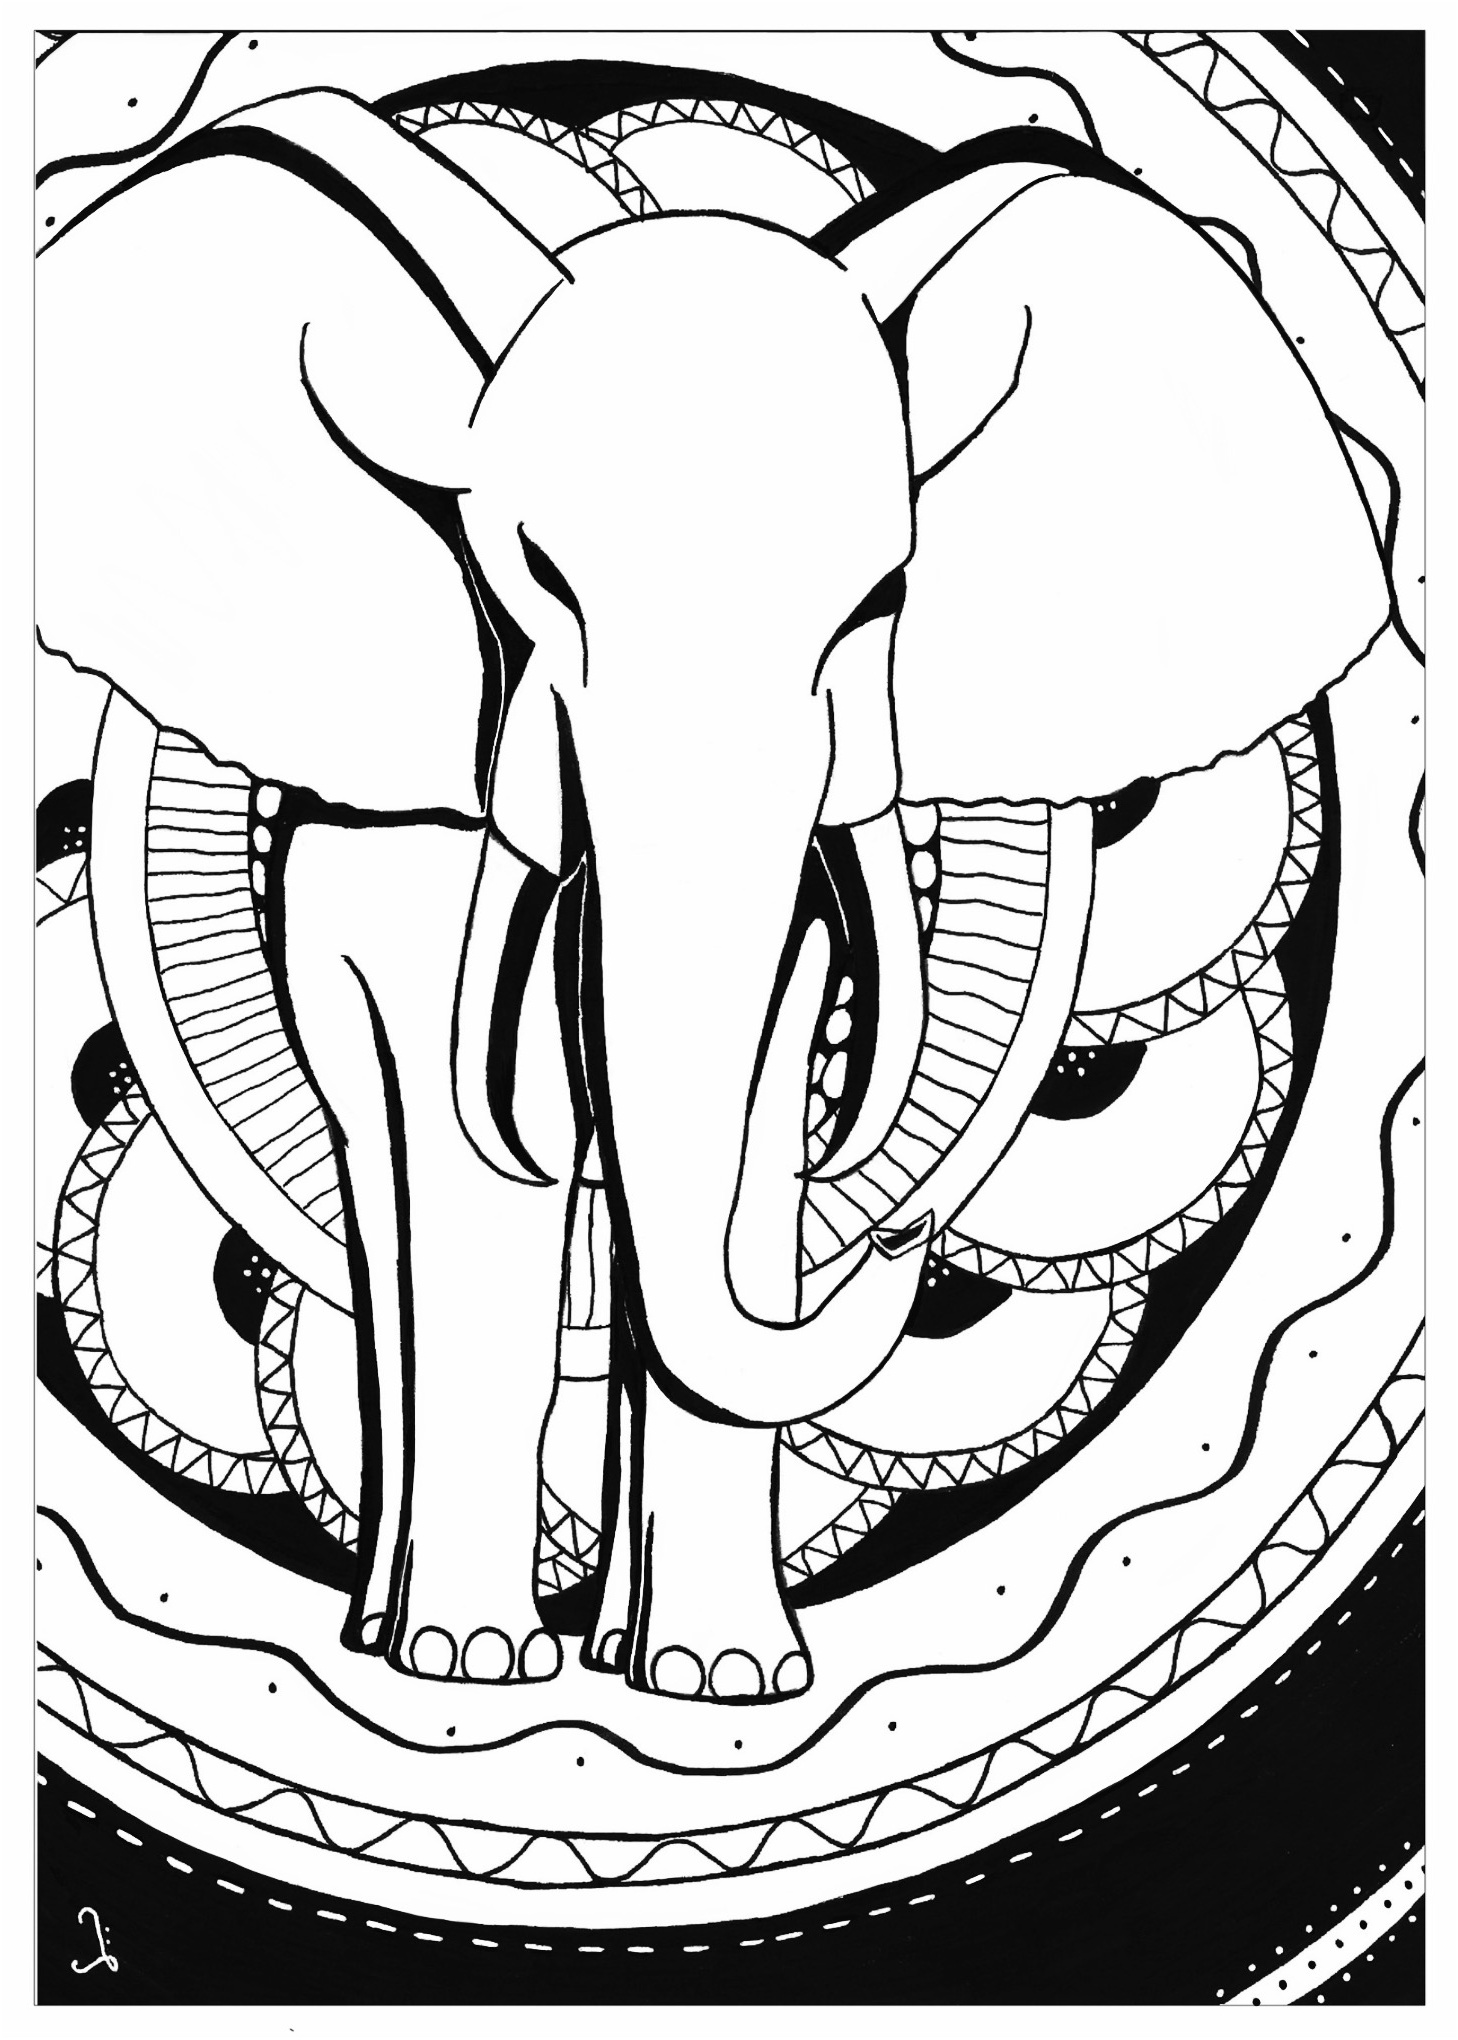 image=elephants coloring page elephant indian style 1